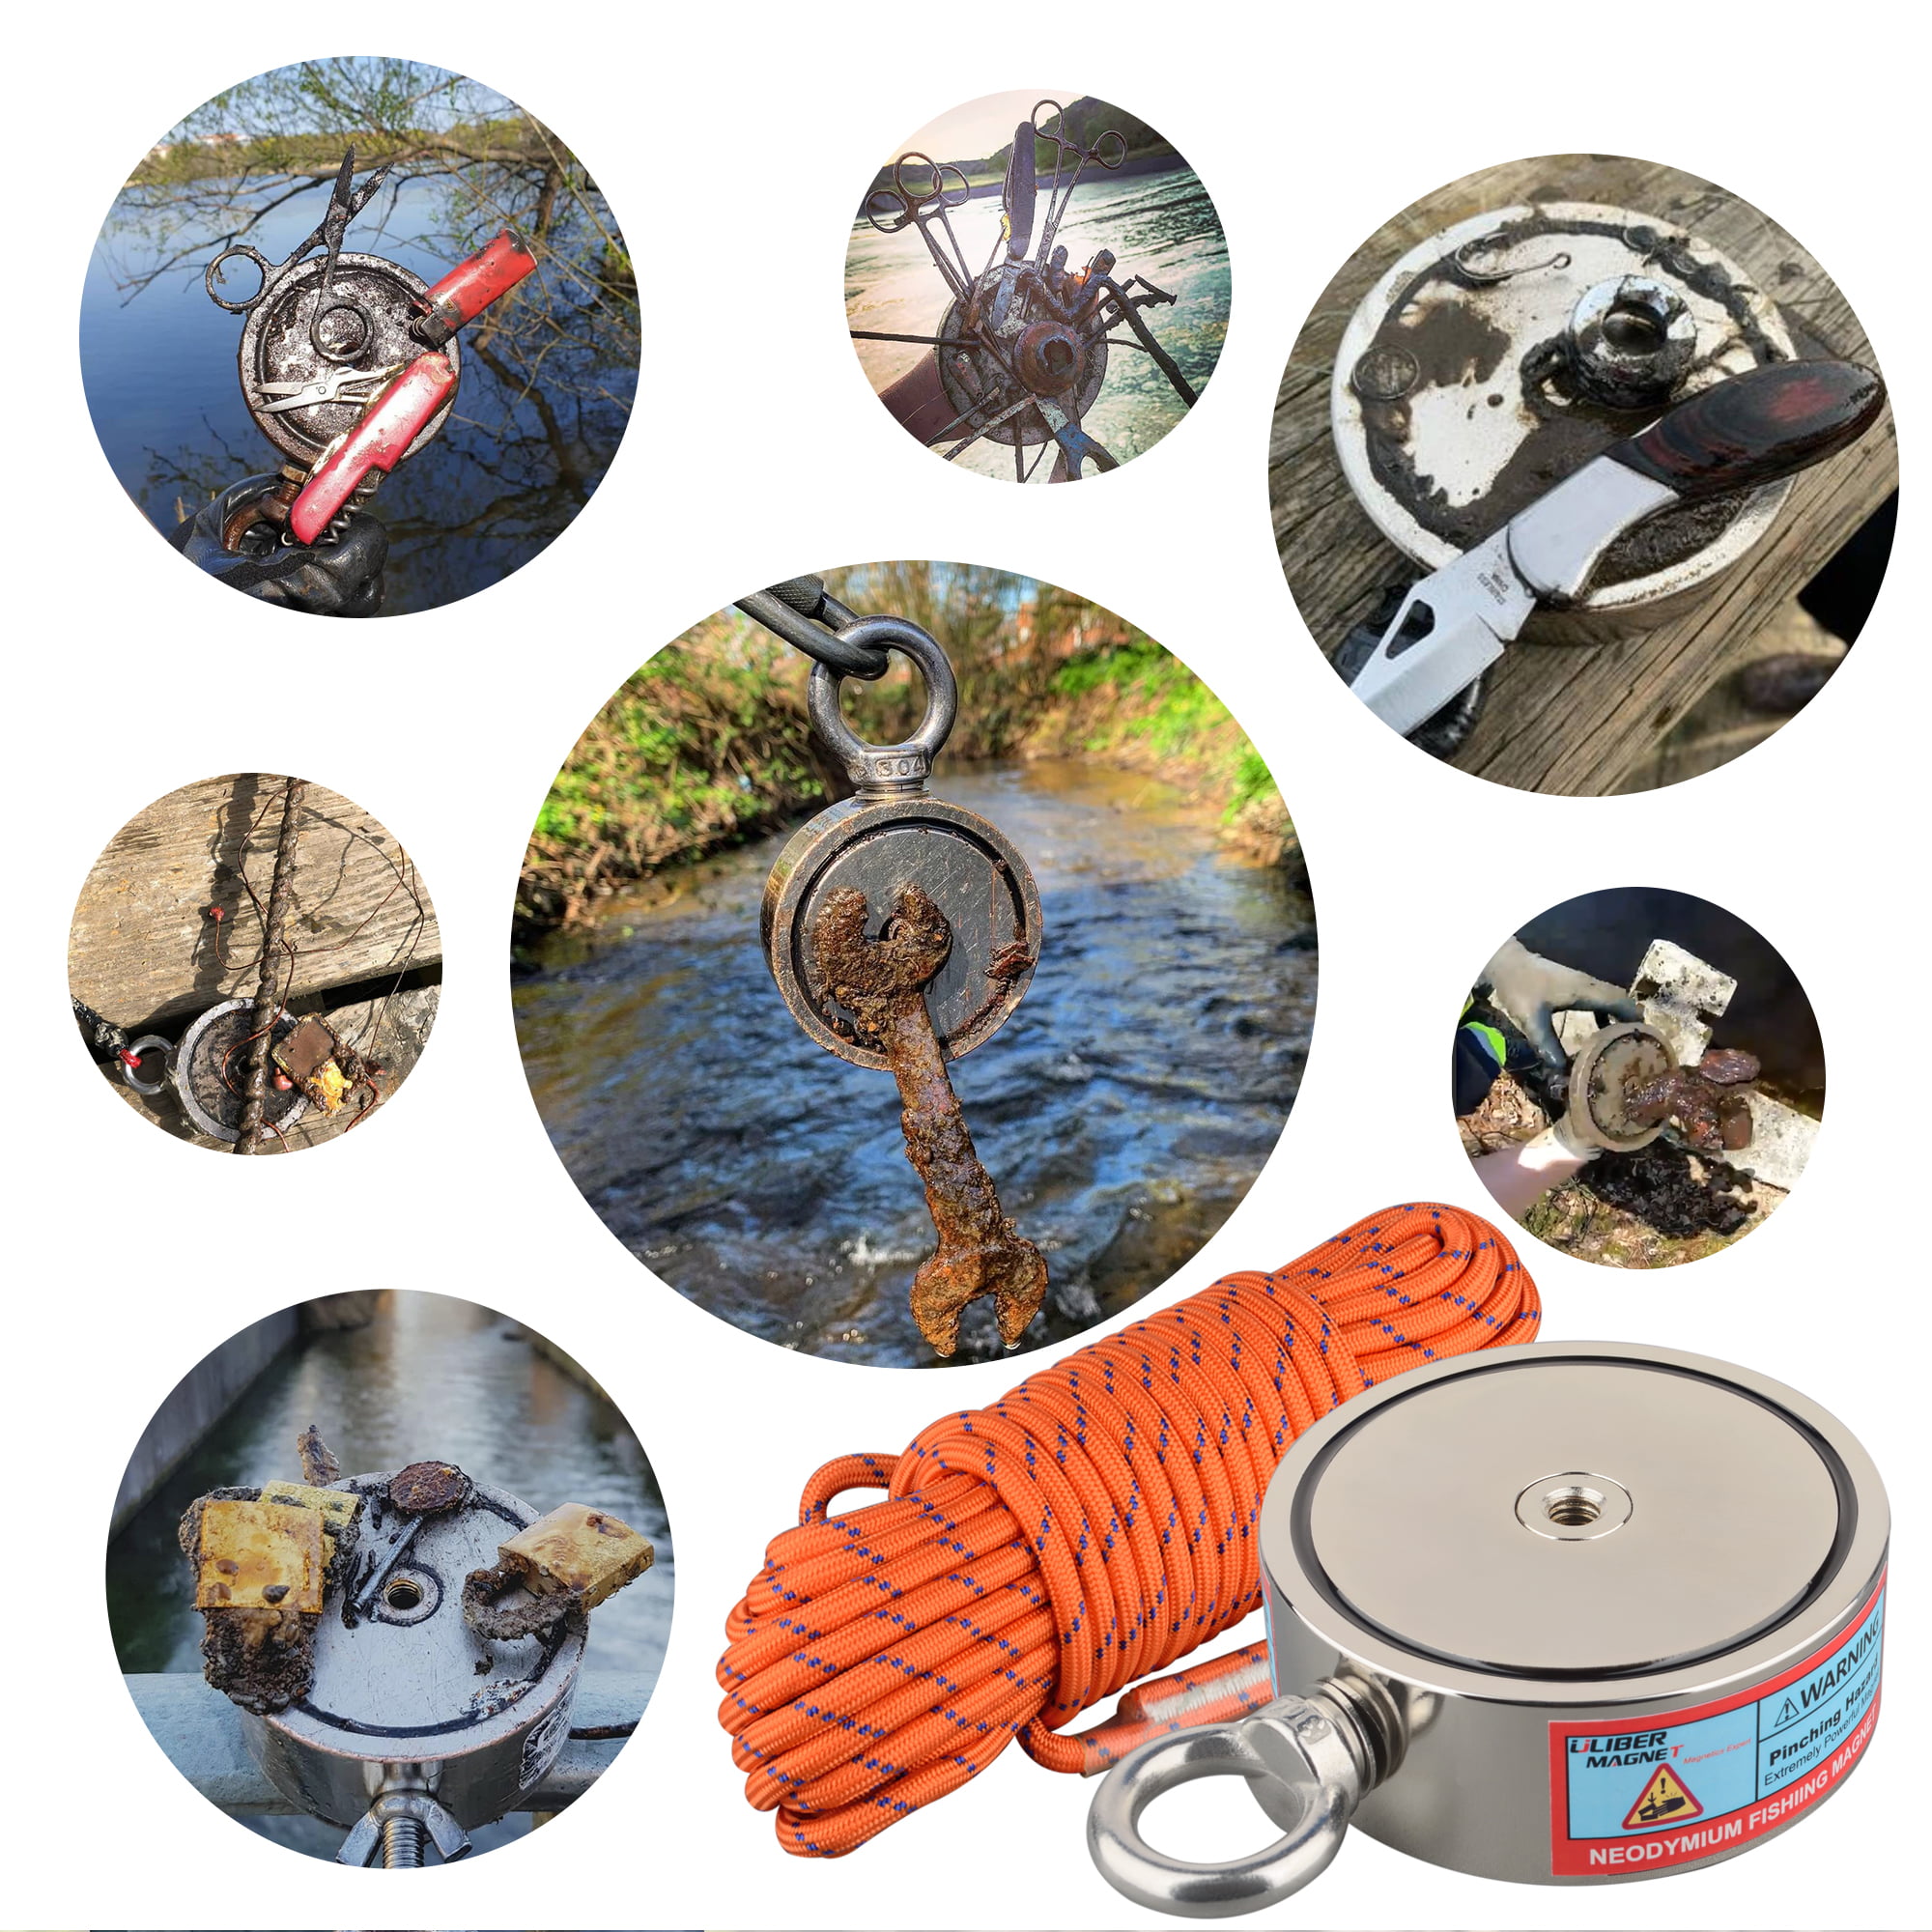 ULIBERMAGNET Fishing Magnet Kit,400LBS Strong Neodymium Magnet Fishing with 20m Nylon Rope & Non-Slip Gloves,Large Strong Magnet for Magnetic Fishing